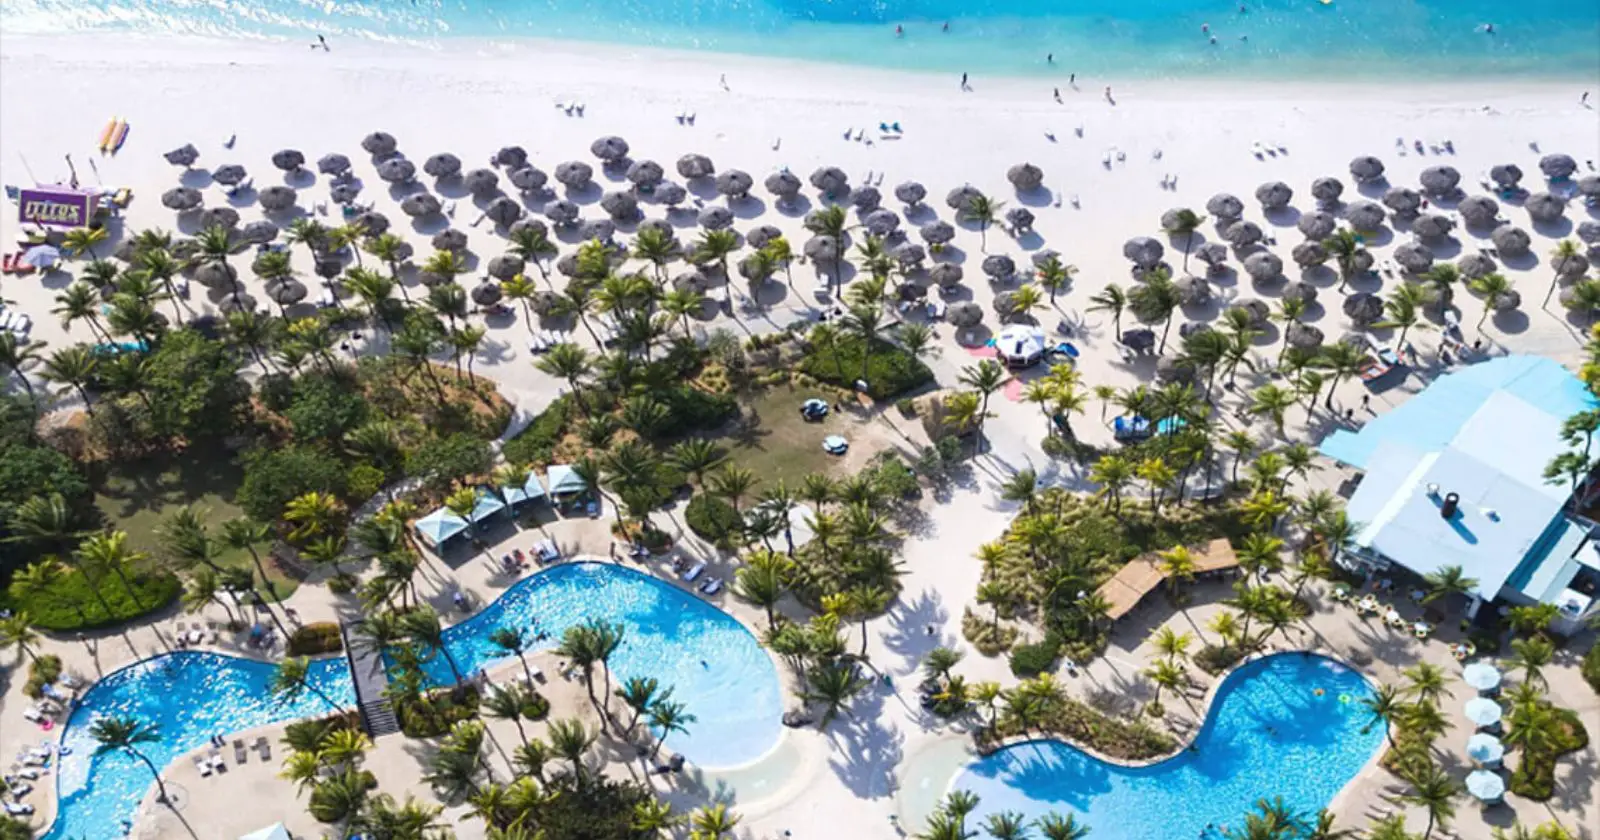 The Hilton Caribbean Resort & Casino Aruba